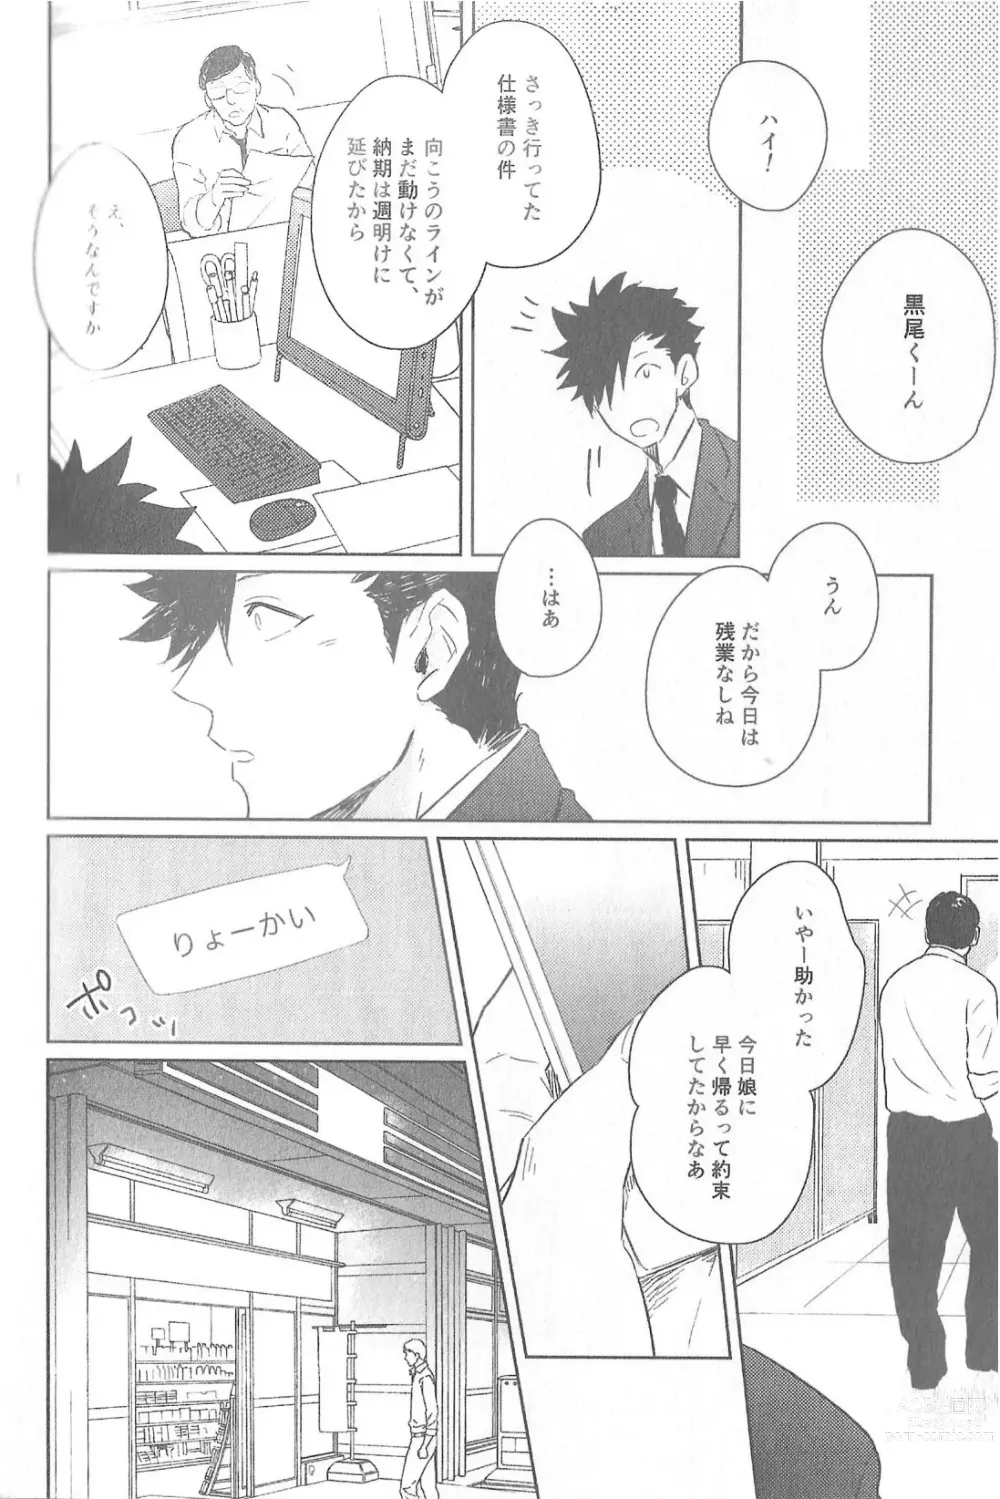 Page 3 of doujinshi Cream